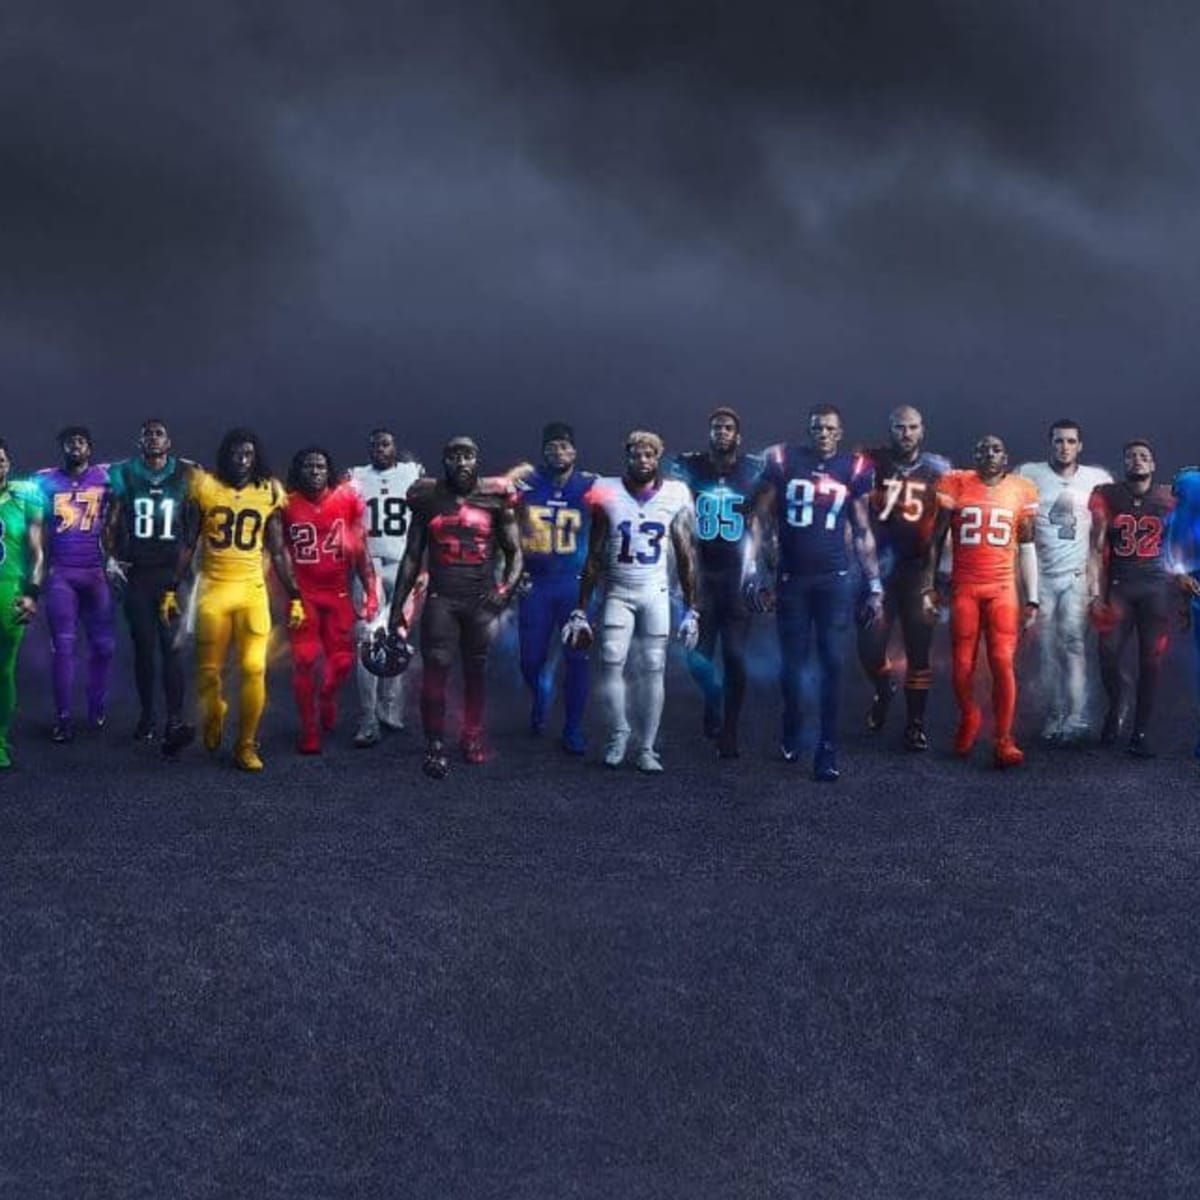 all 32 color rush uniforms